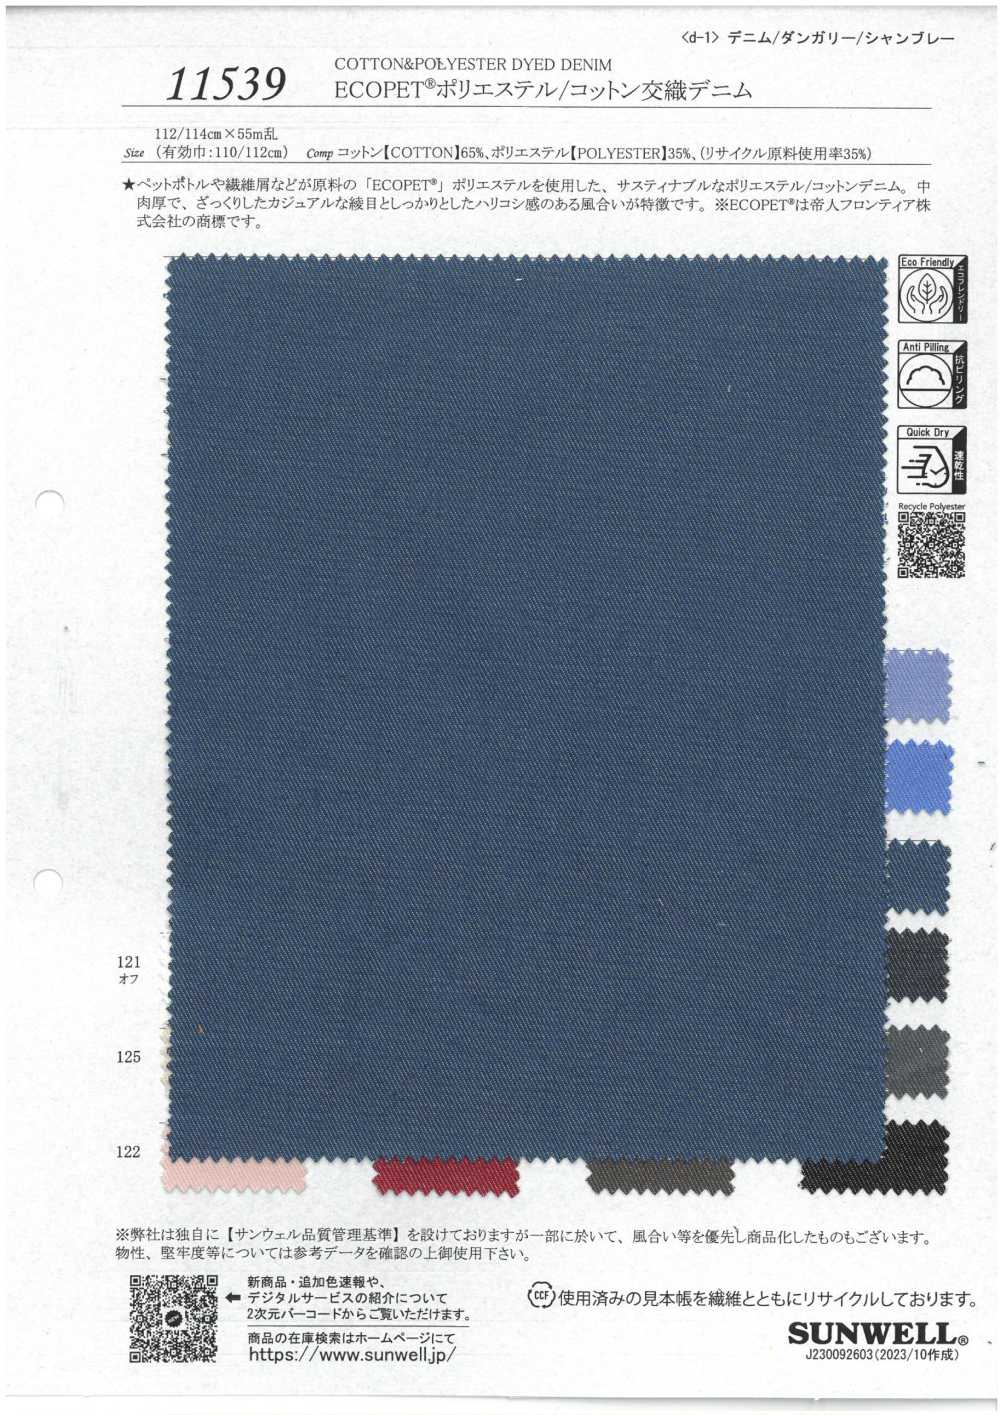 11539 ECOPET® Polyester/cotton Blend Denim[Textile / Fabric] SUNWELL